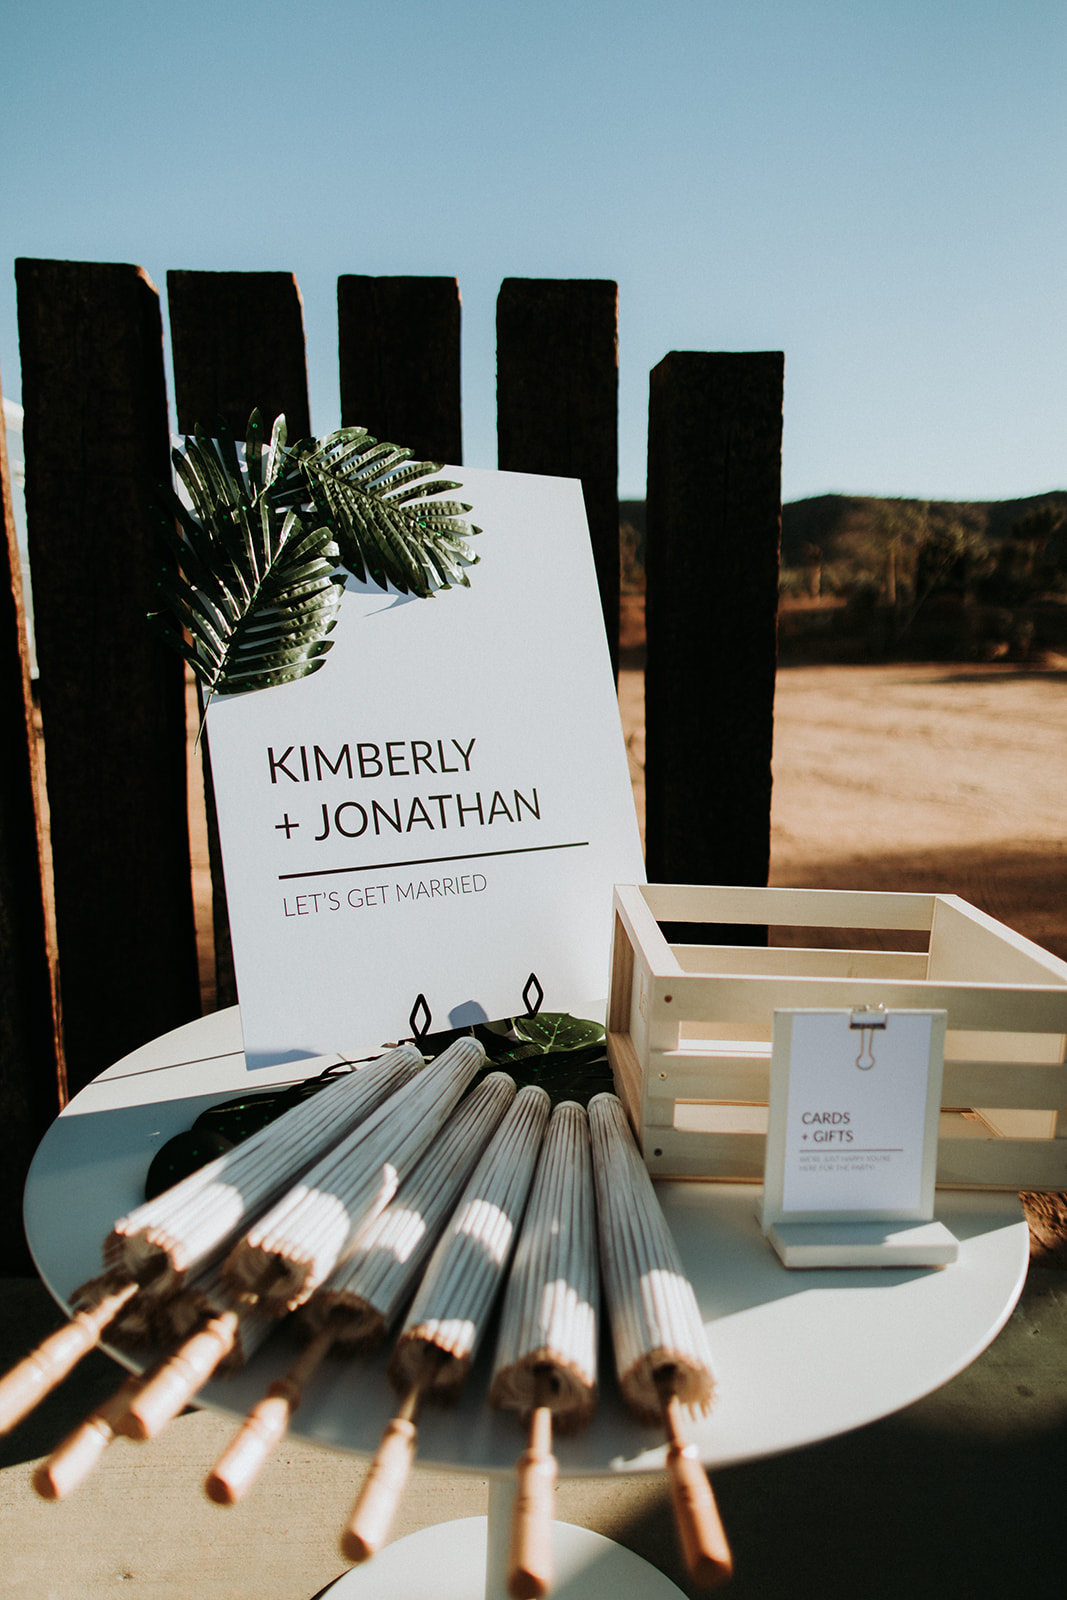 A Joshua Tree wedding at Tumbleweed Sanctuary, modern welcome table umbrellas